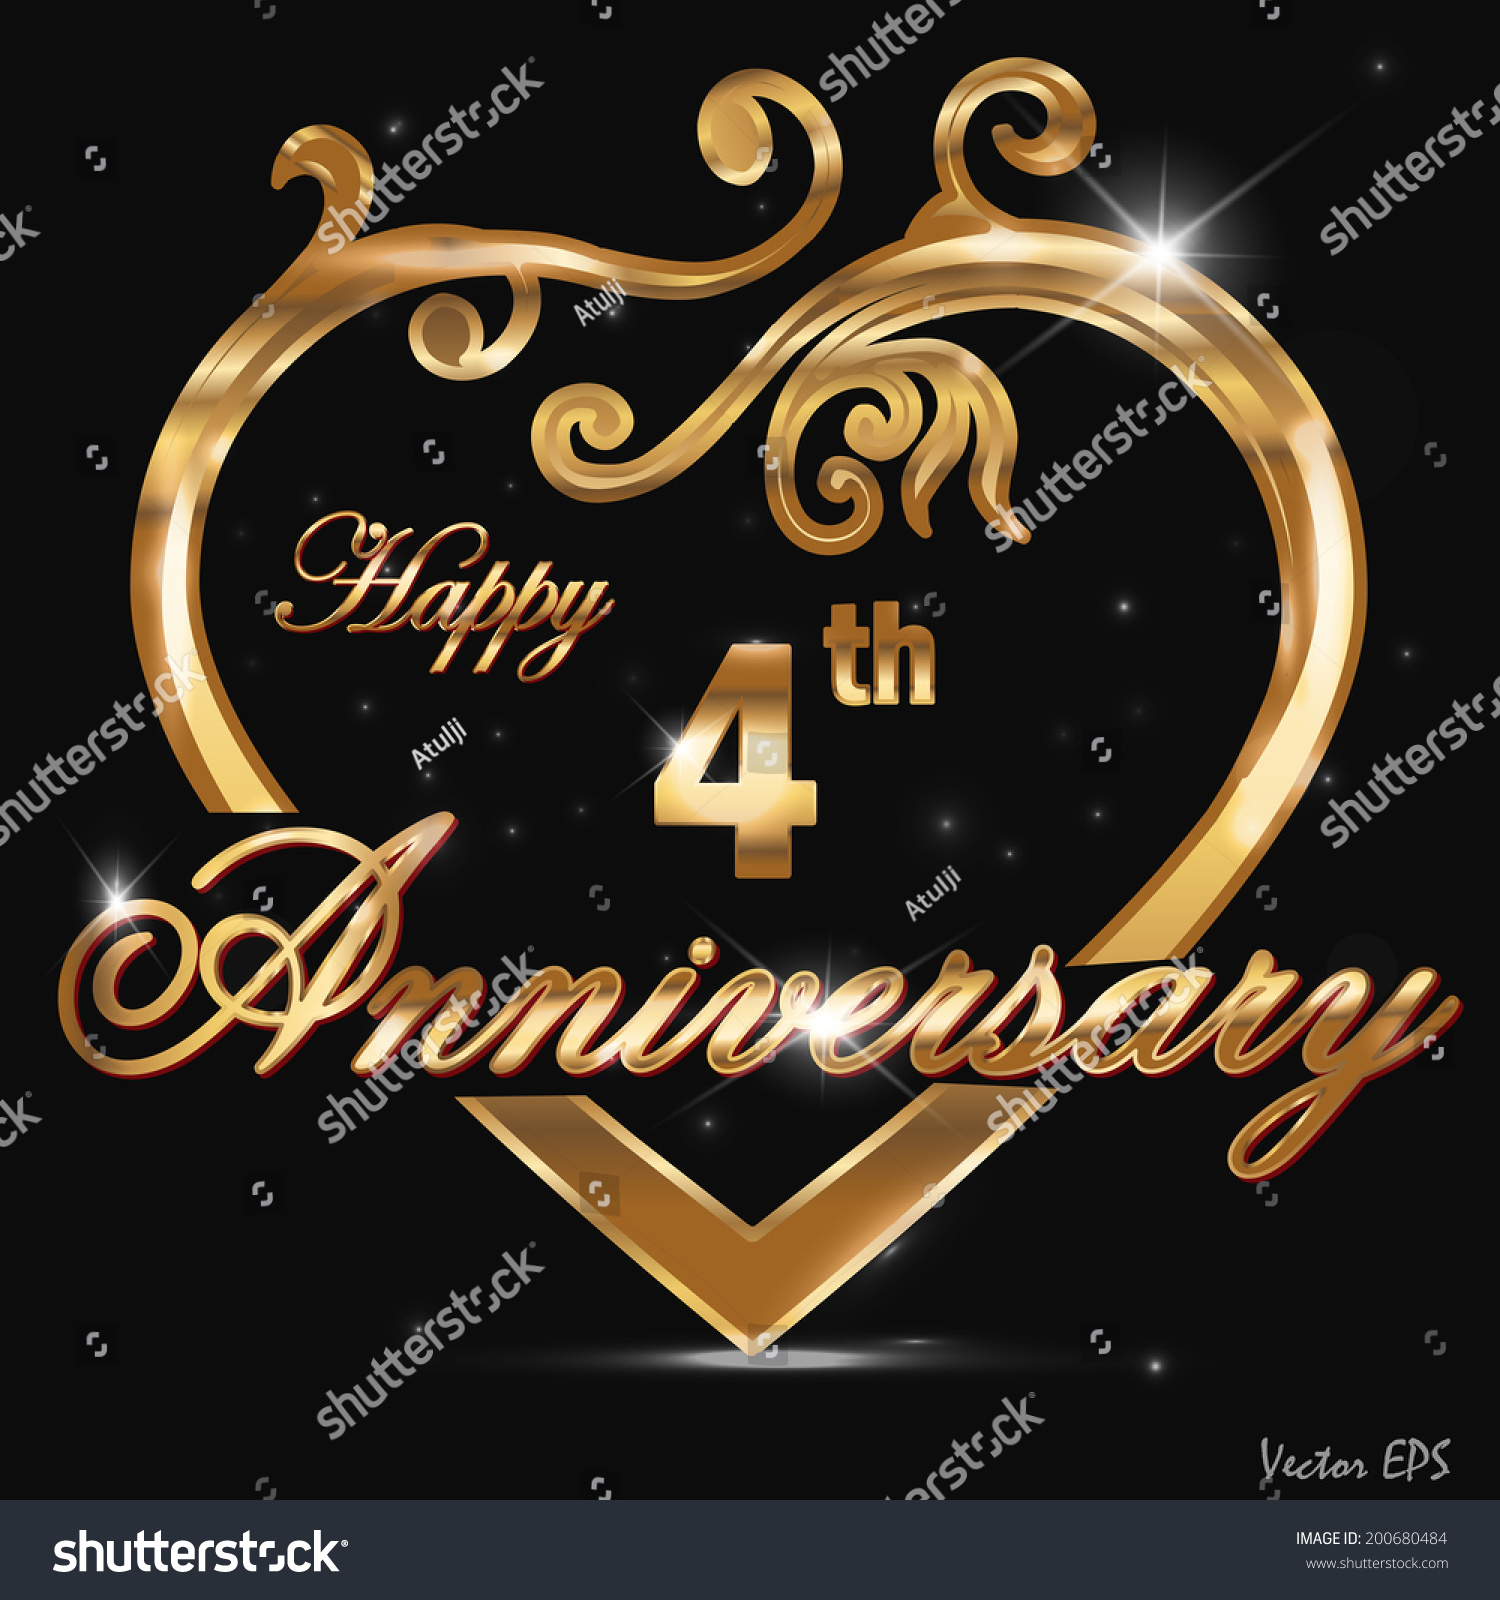 SVG of 4 year anniversary golden heart, 4th anniversary decorative golden heart design - vector eps10 svg